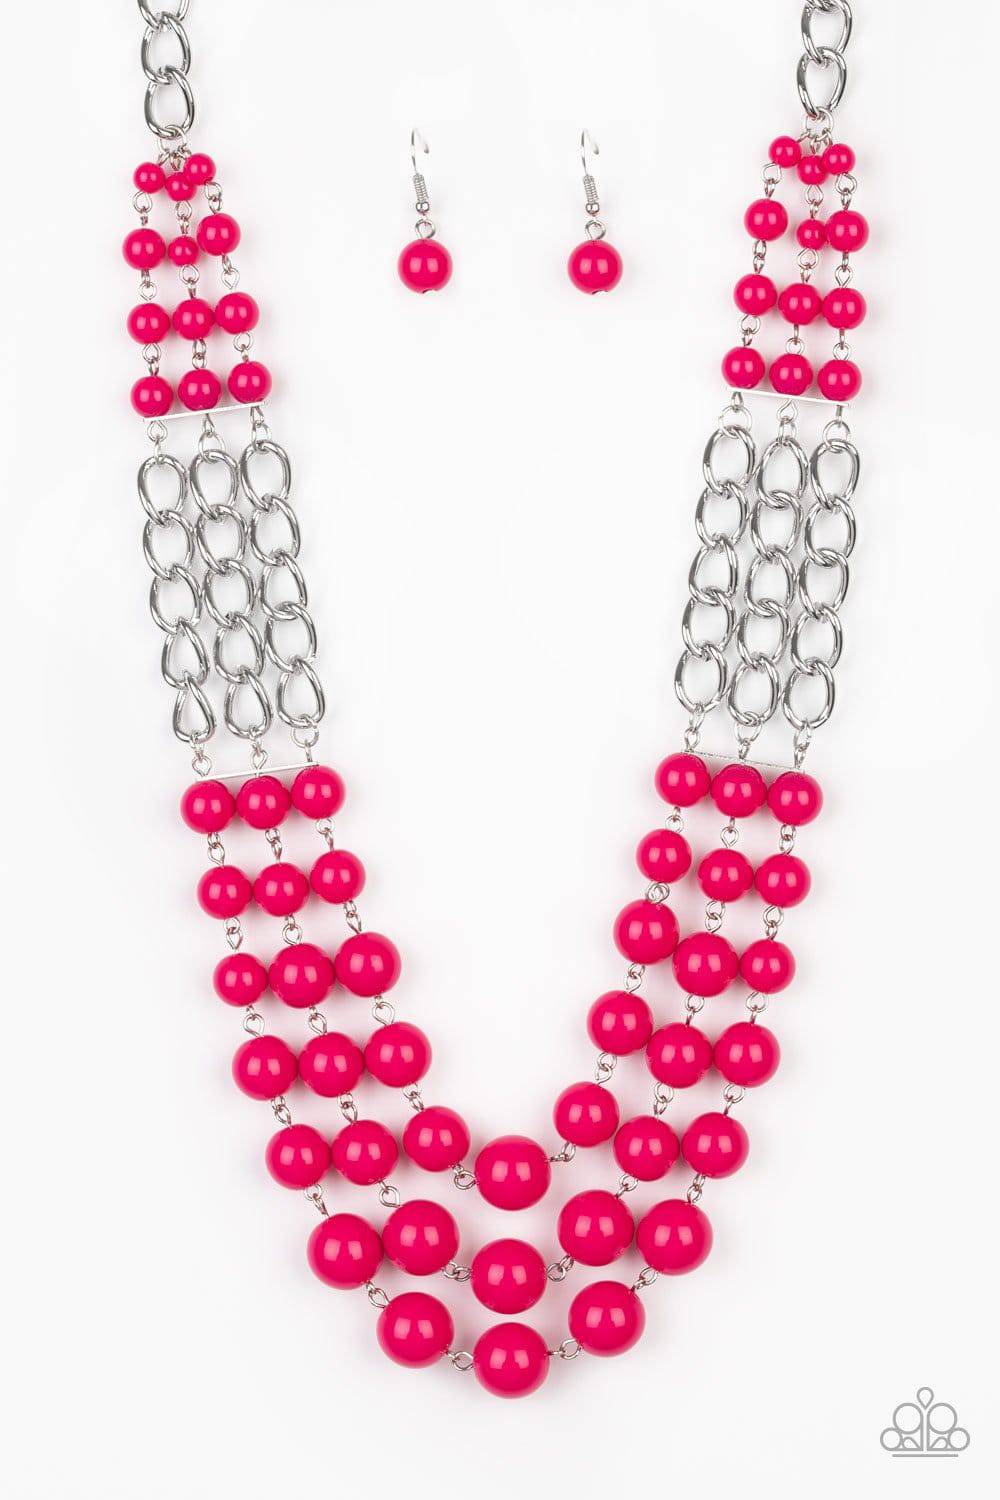 A353 - A La Vogue Pink Necklace by Paparazzi Accessories on Fancy5Fashion.com